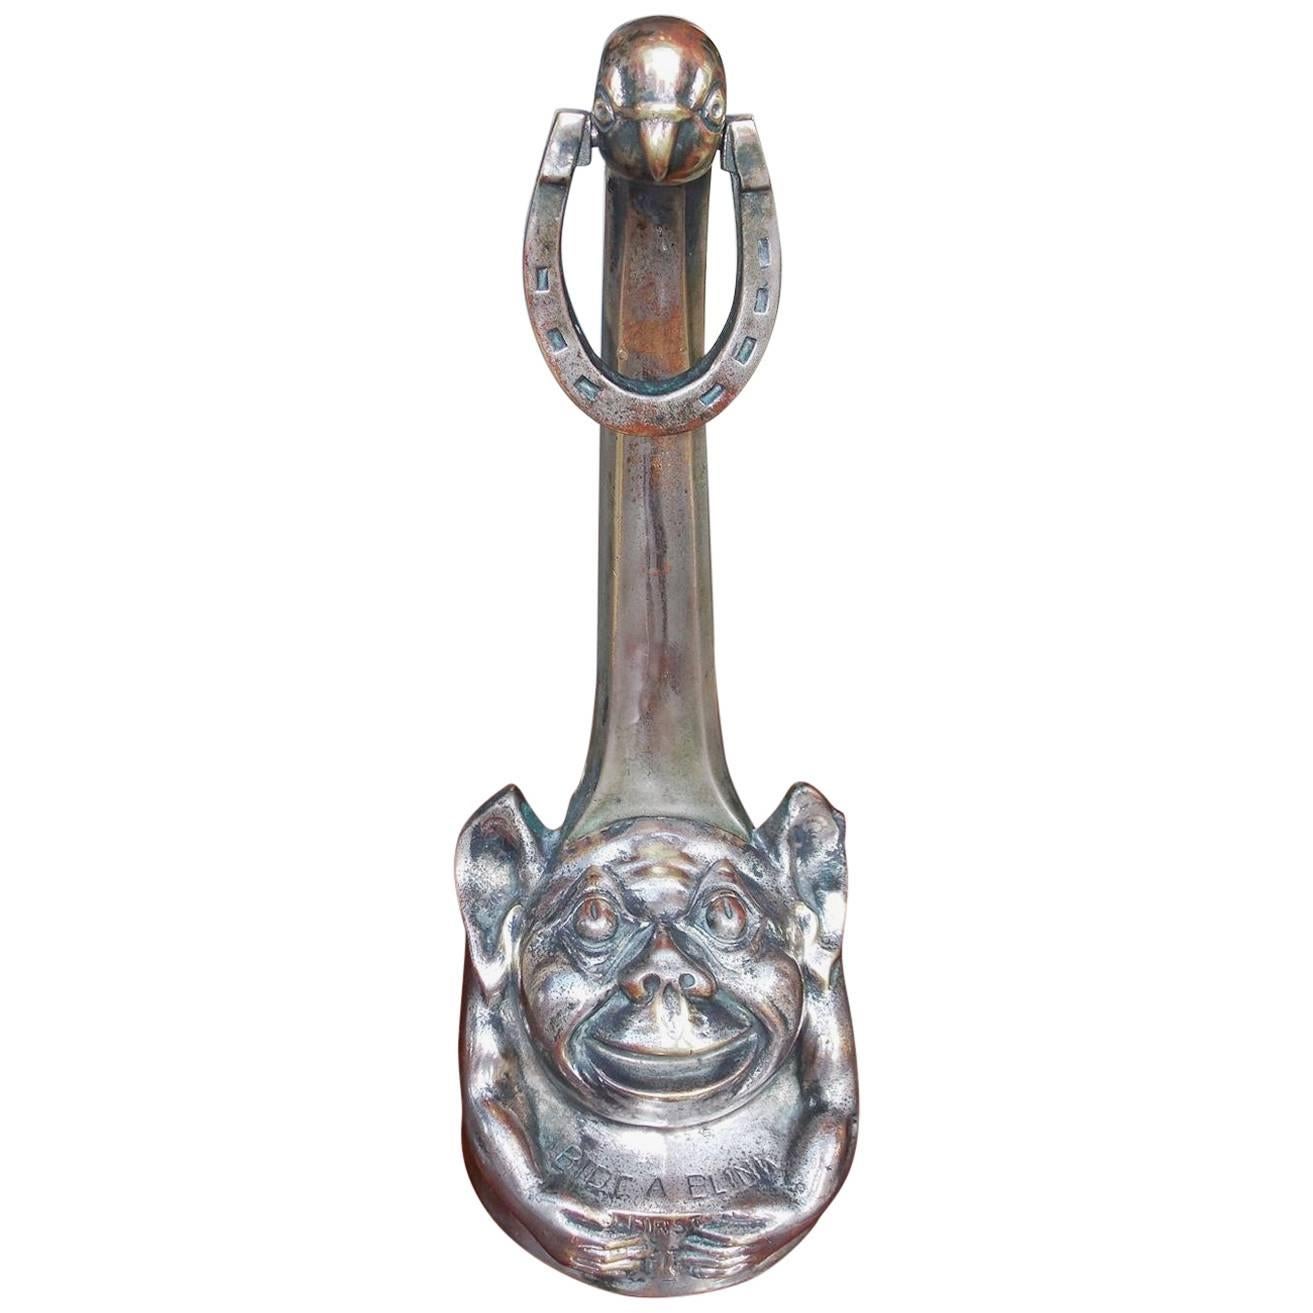 Scottish Brass and Nickel Silver Horse Hobble, Bide A Blink, Circa 1830